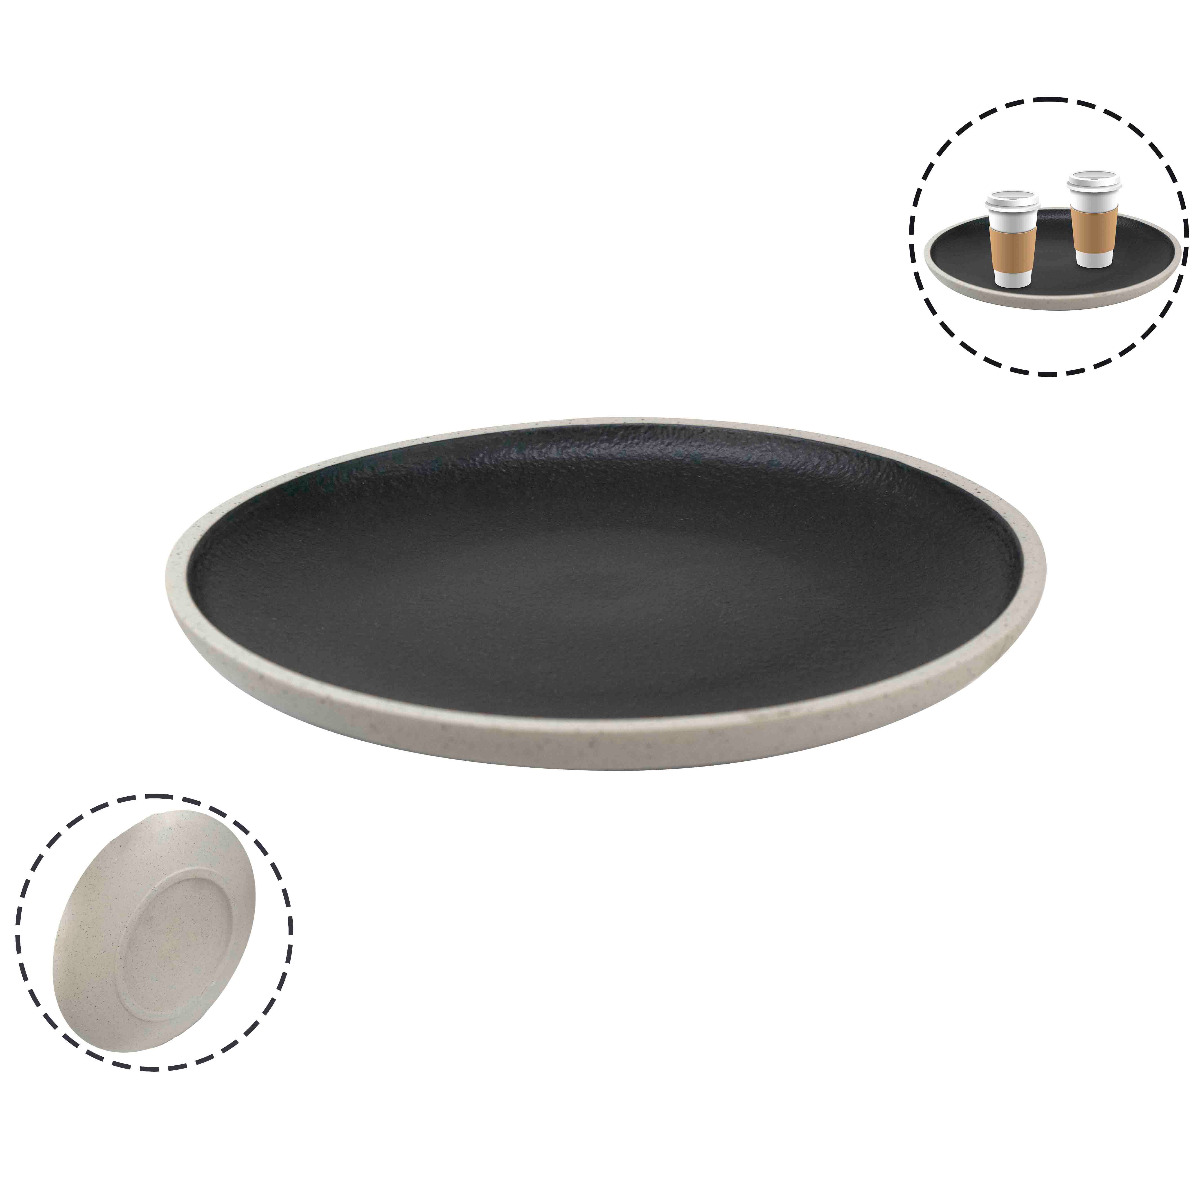 Ceramic serving plate 20cm-KR011707